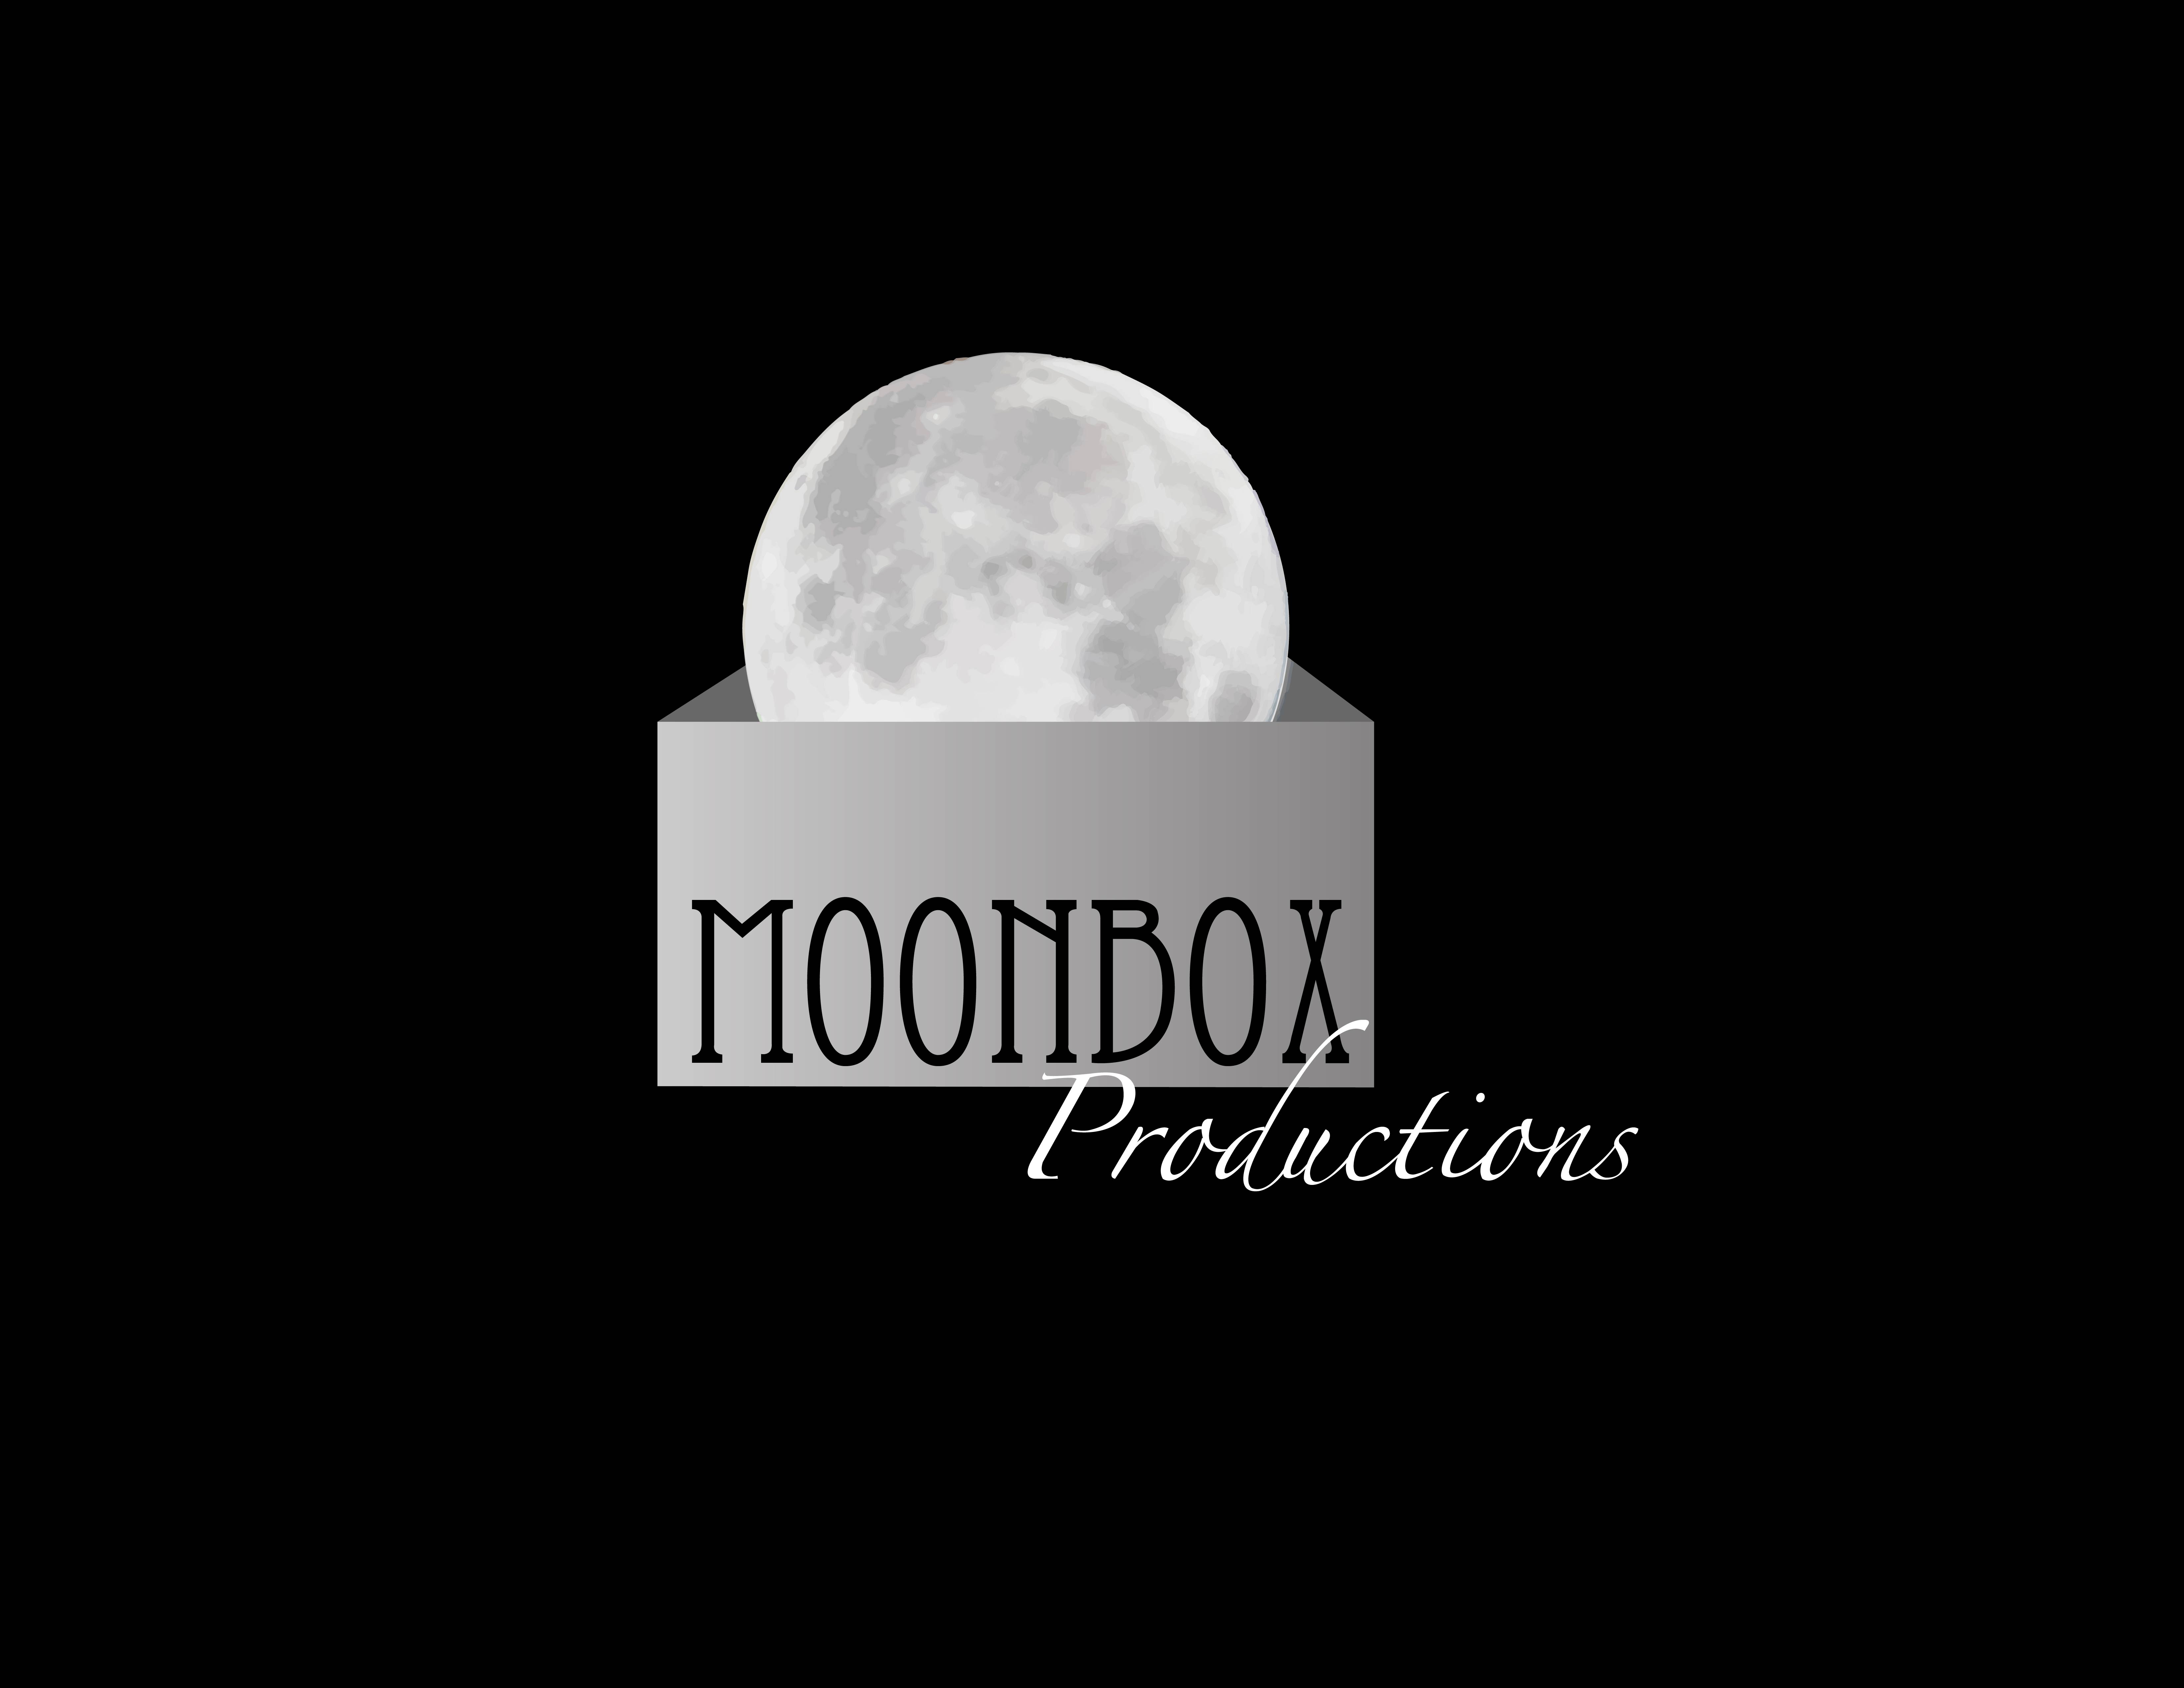 Moonbox Productions logo